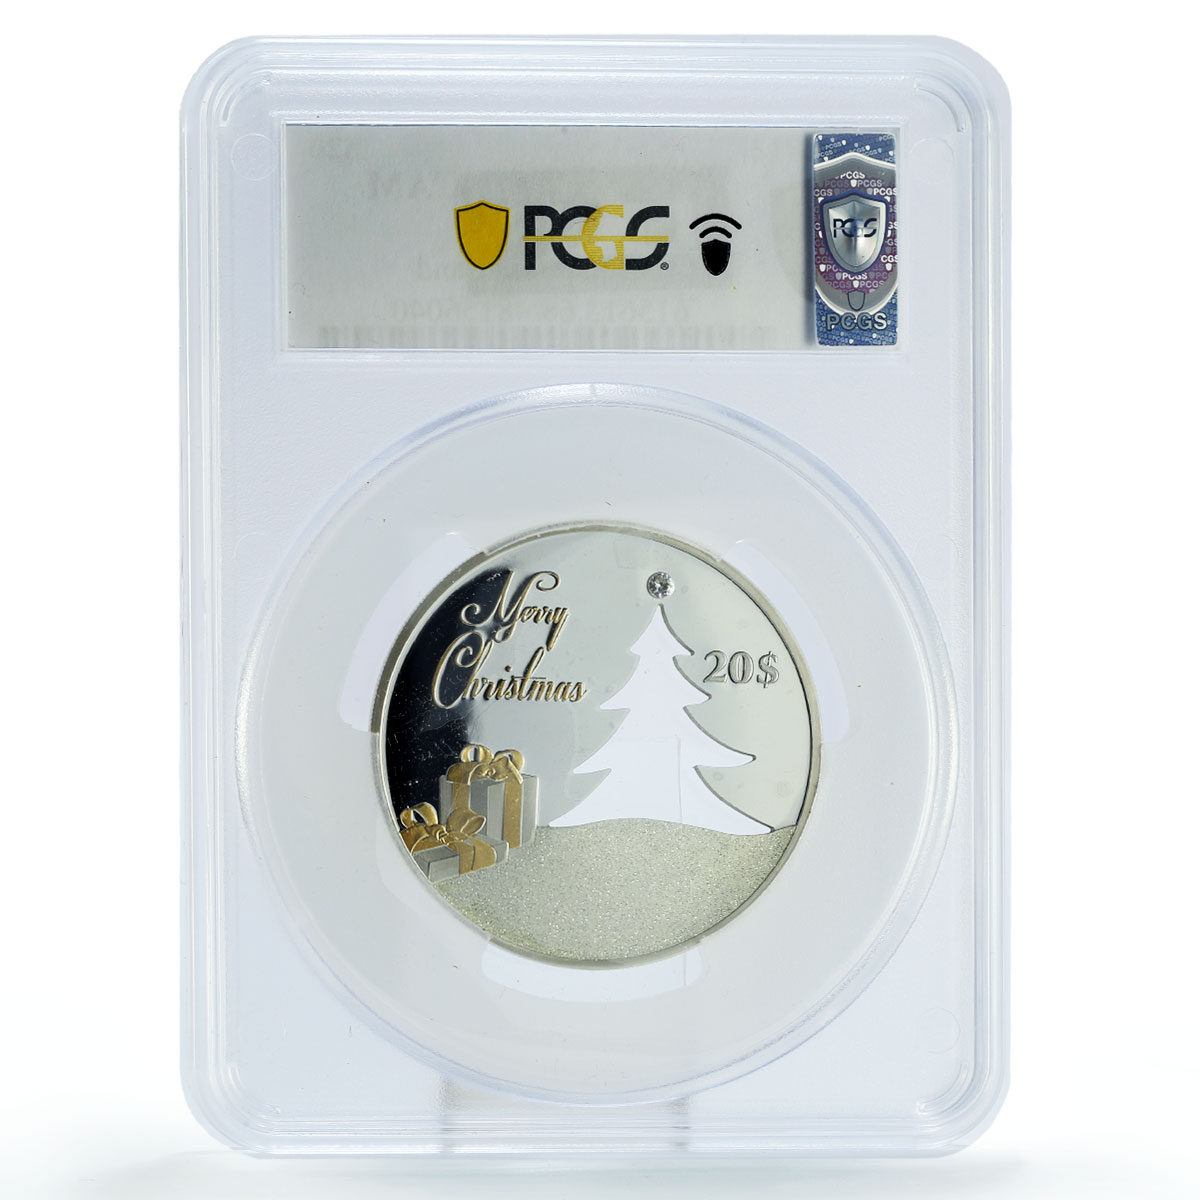 Kiribati 20 dollars Holidays Christmas Gifts Gilt PR68 PCGS silver coin 2012